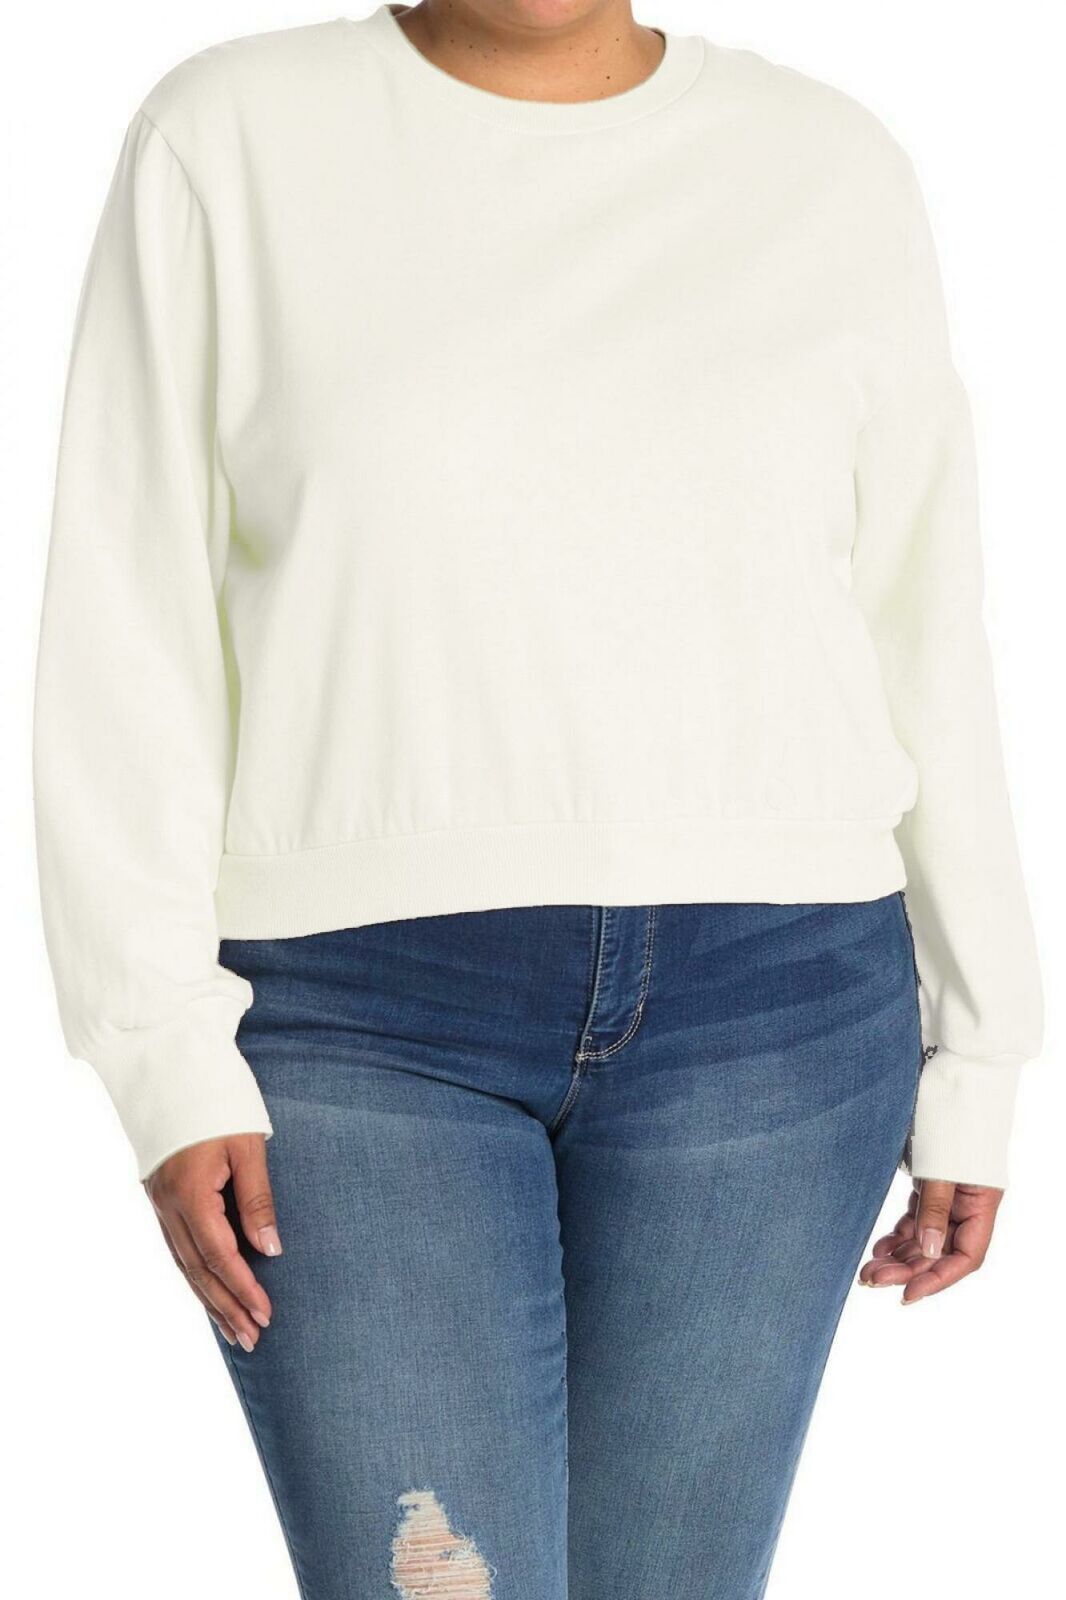 AFRM Women's Plus Size Fossi Crop Sweatshirt